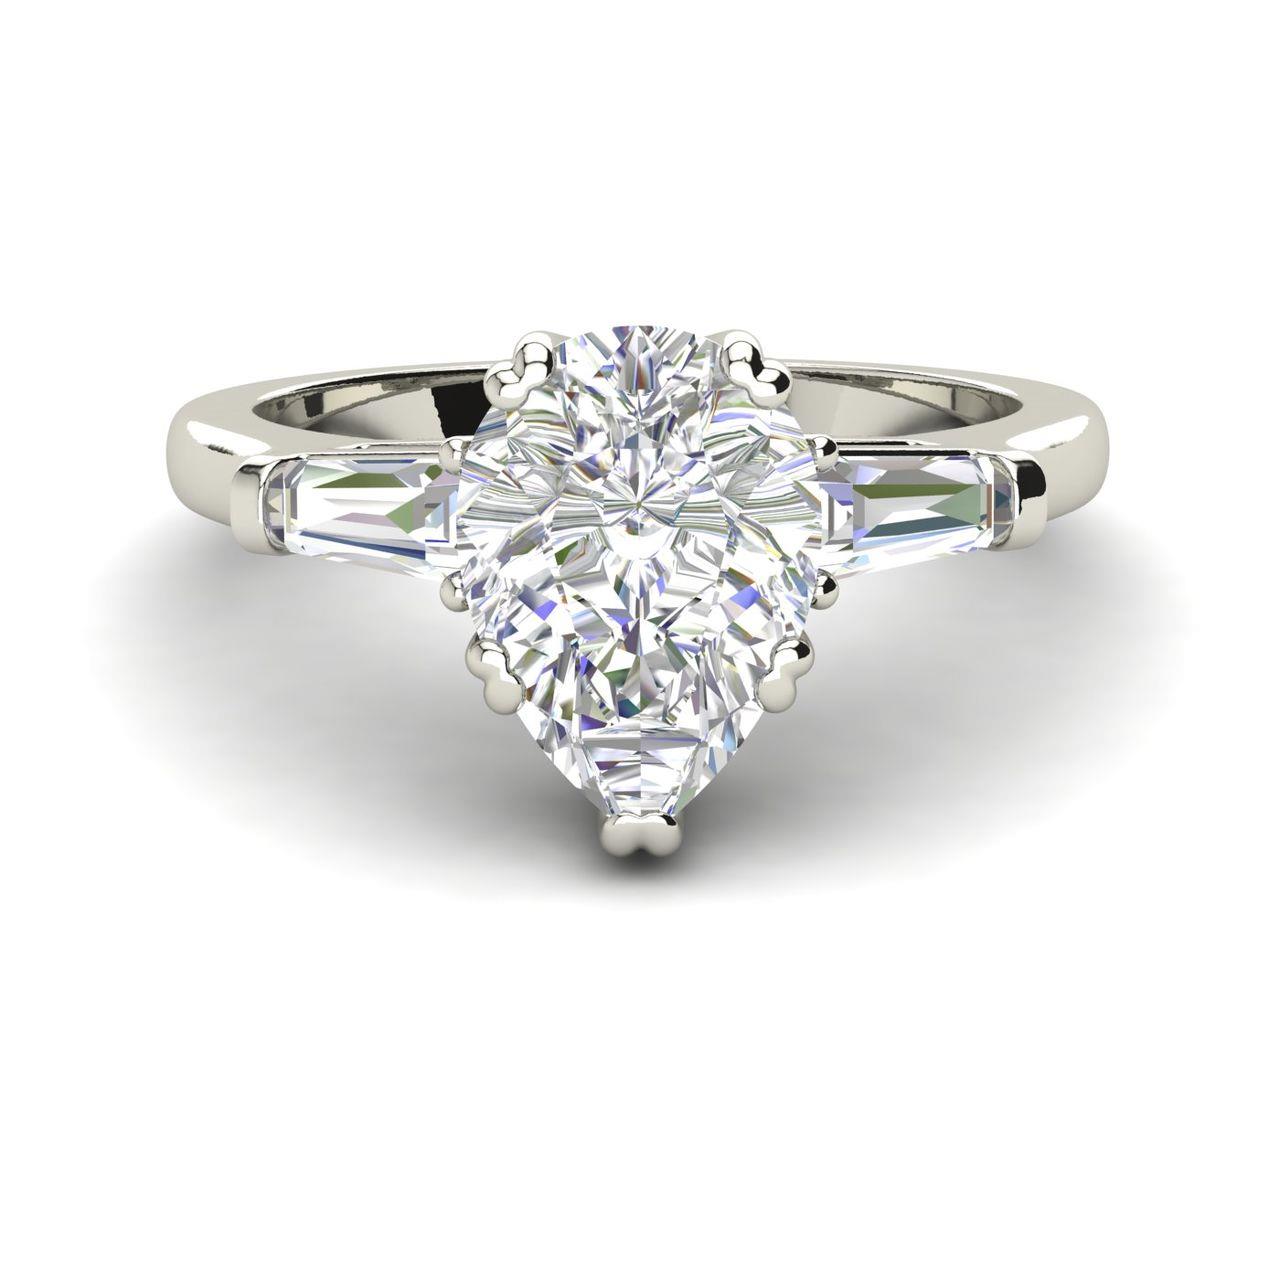 Baguette Accents 1.5 Ct Pear Cut Diamond Engagement Ring